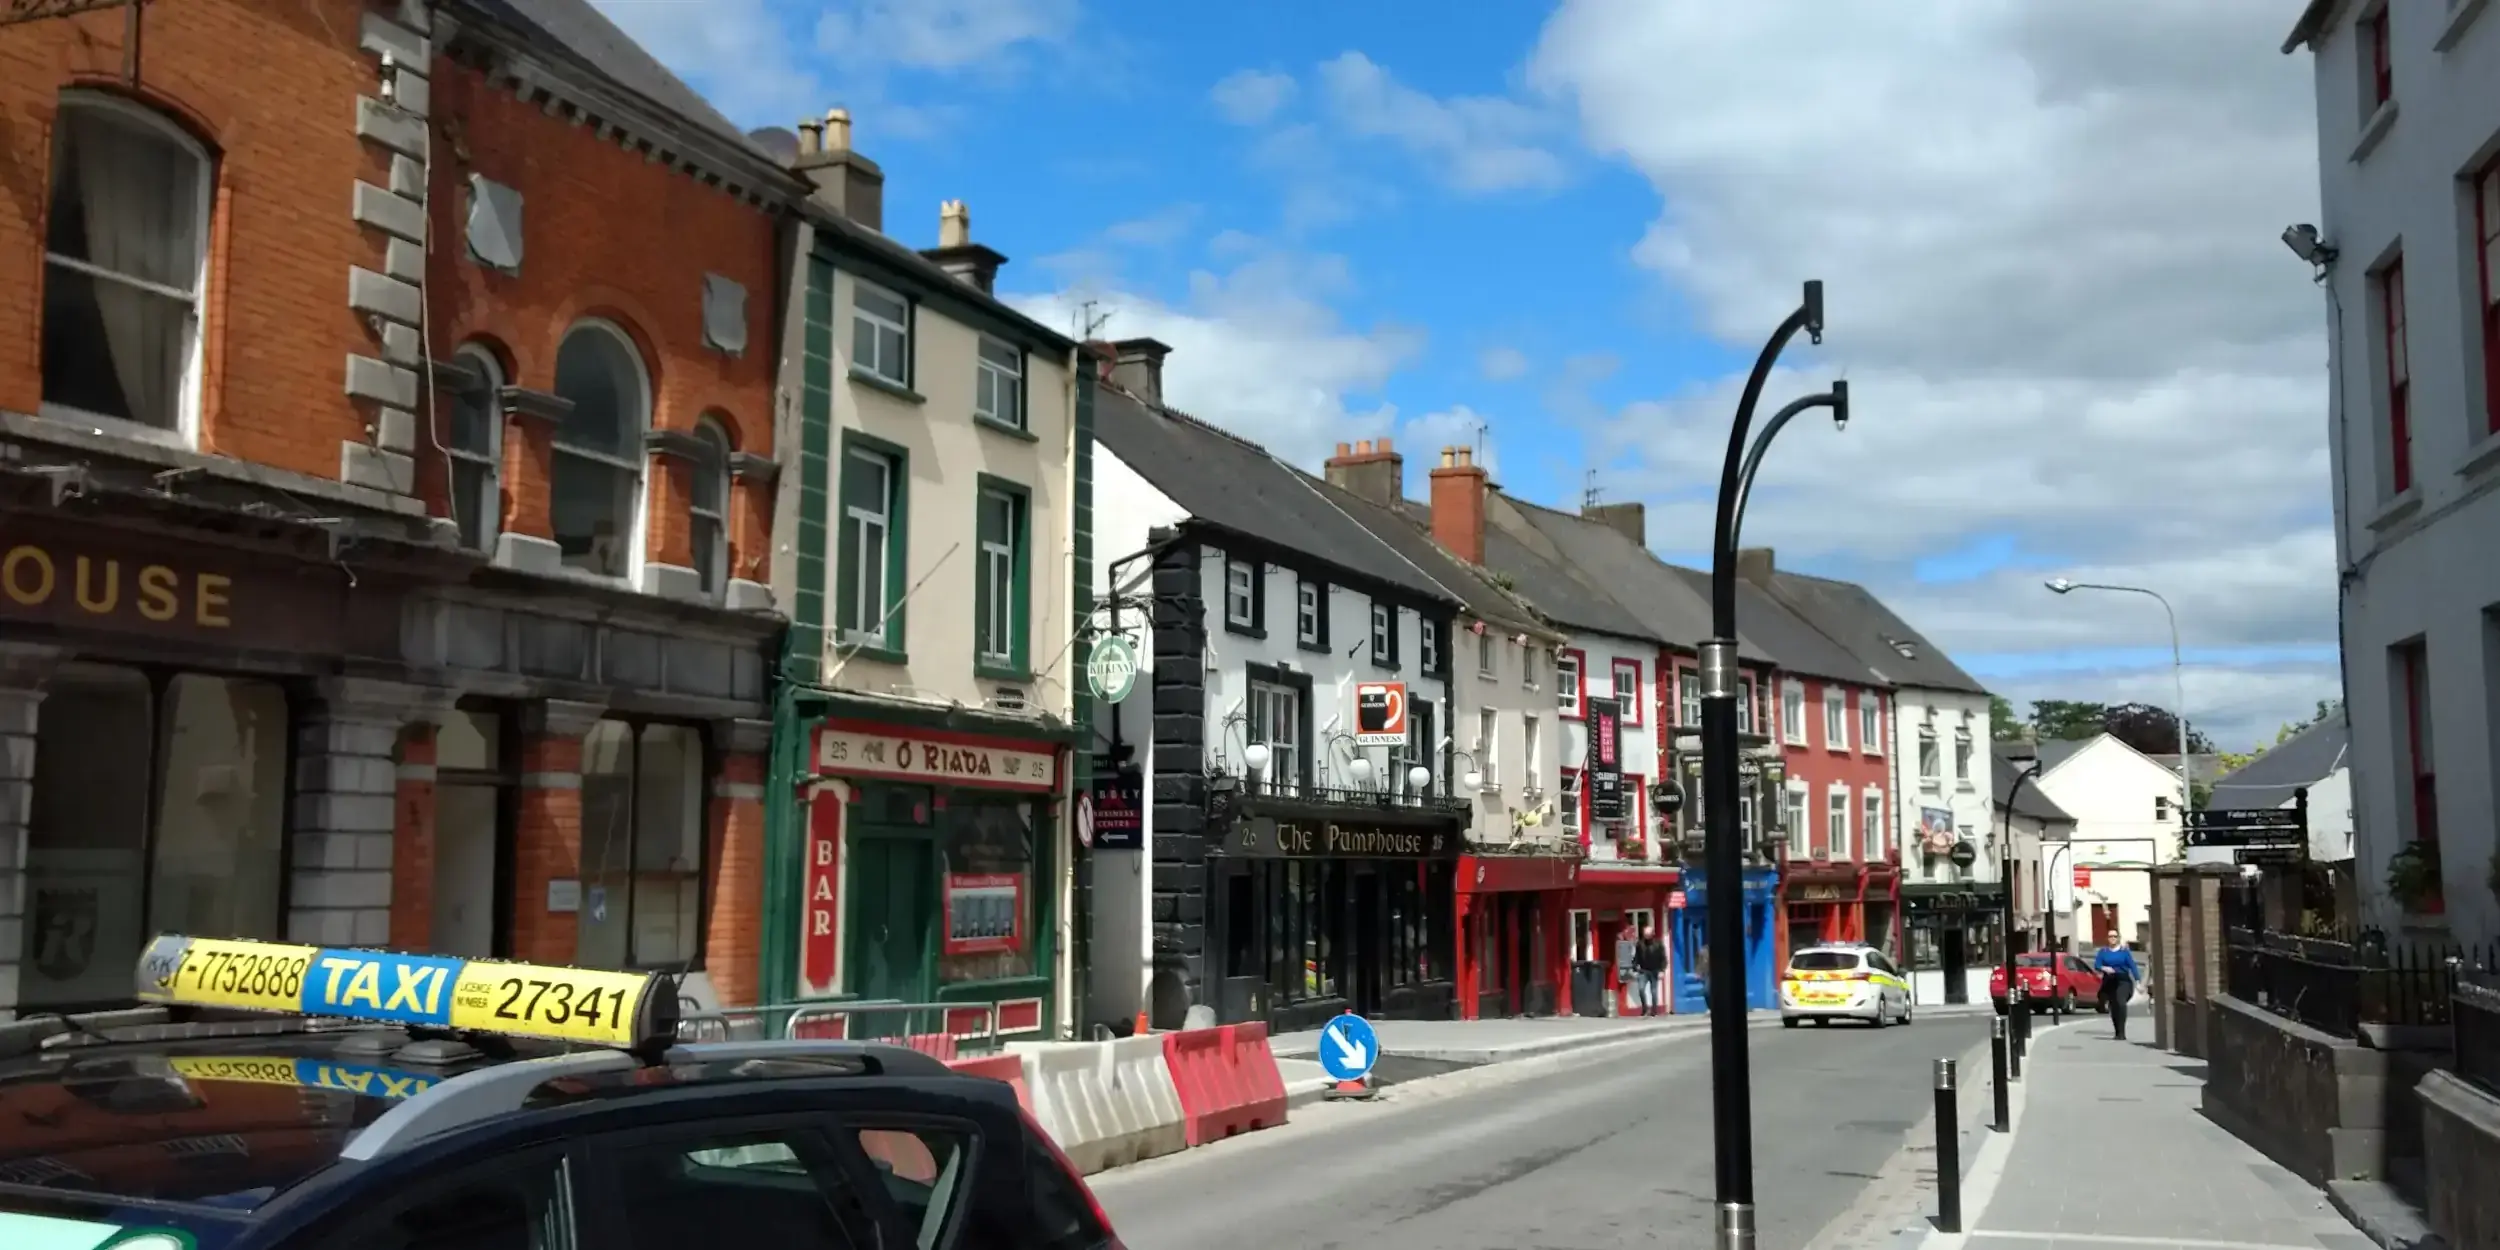 2 Days in Kilkenny, Ireland